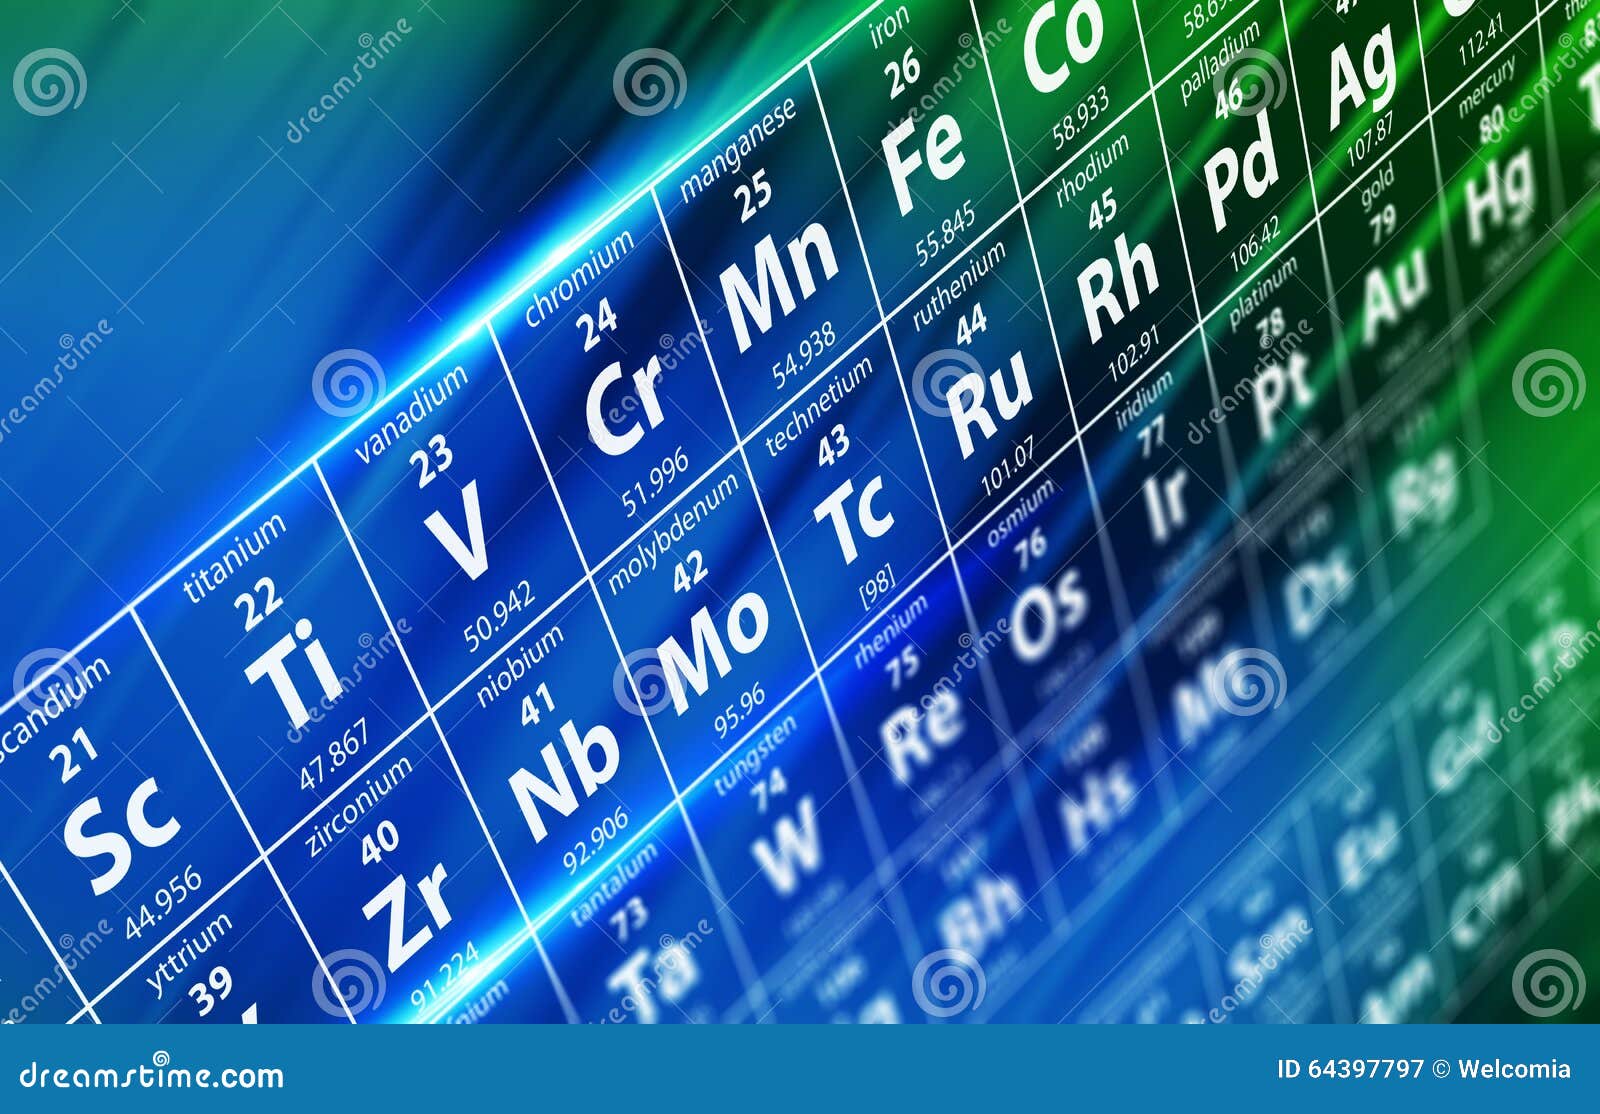 periodic table concept